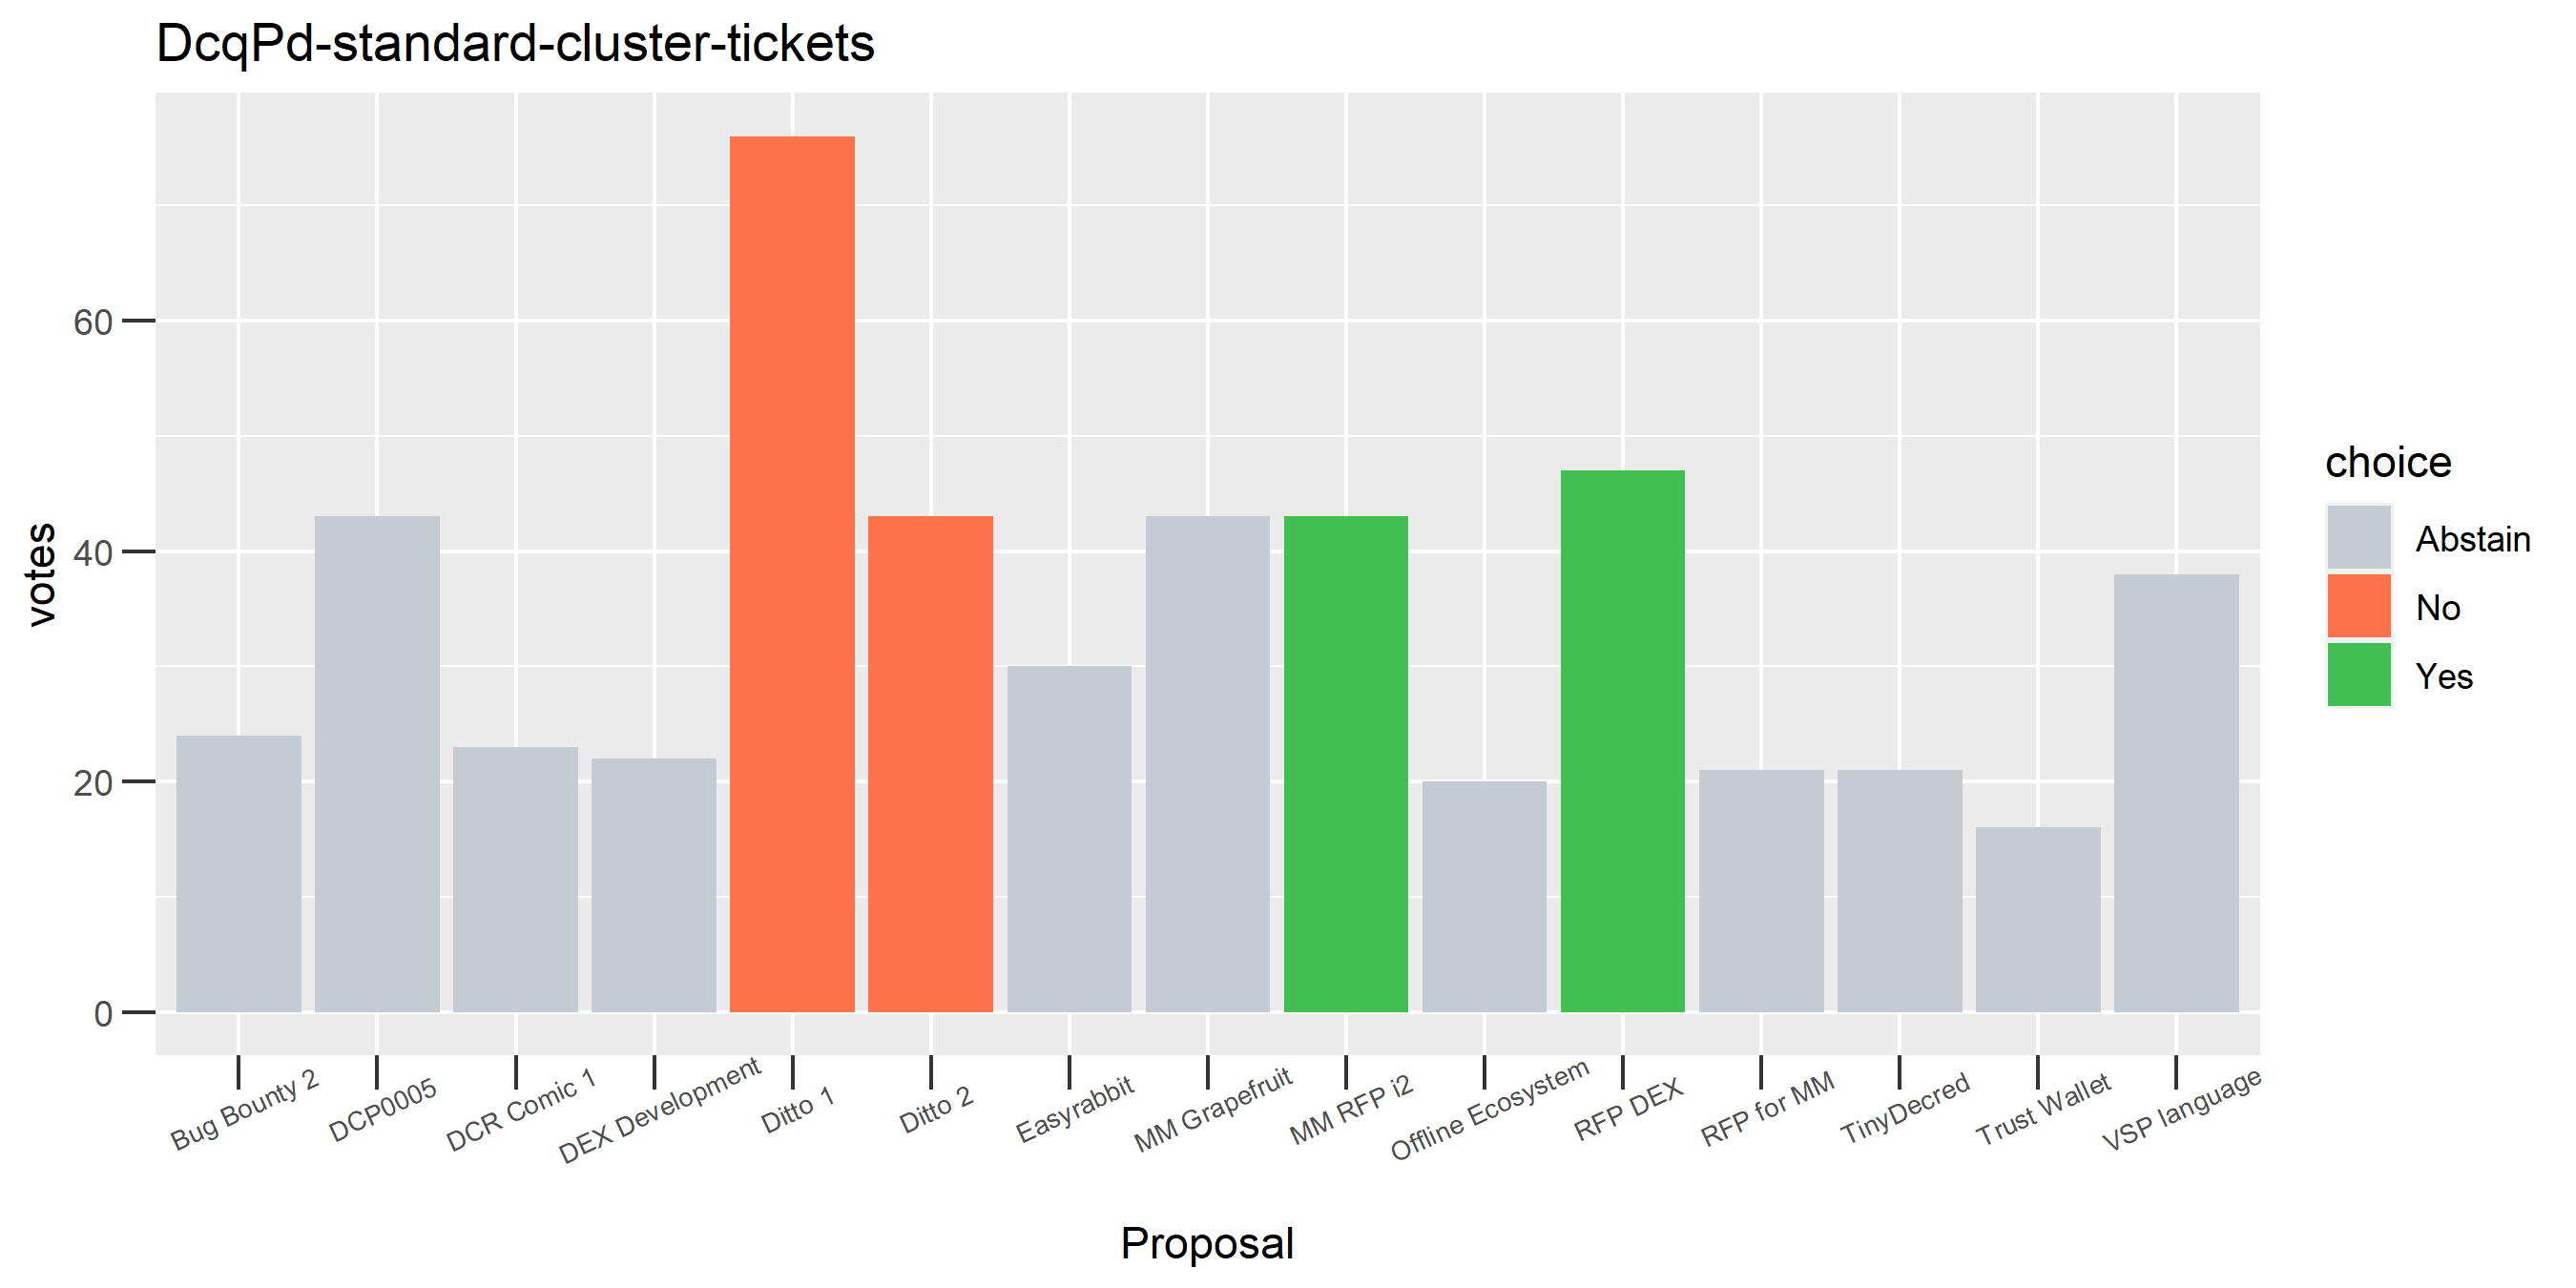 DcqPd-standard-cluster-tickets